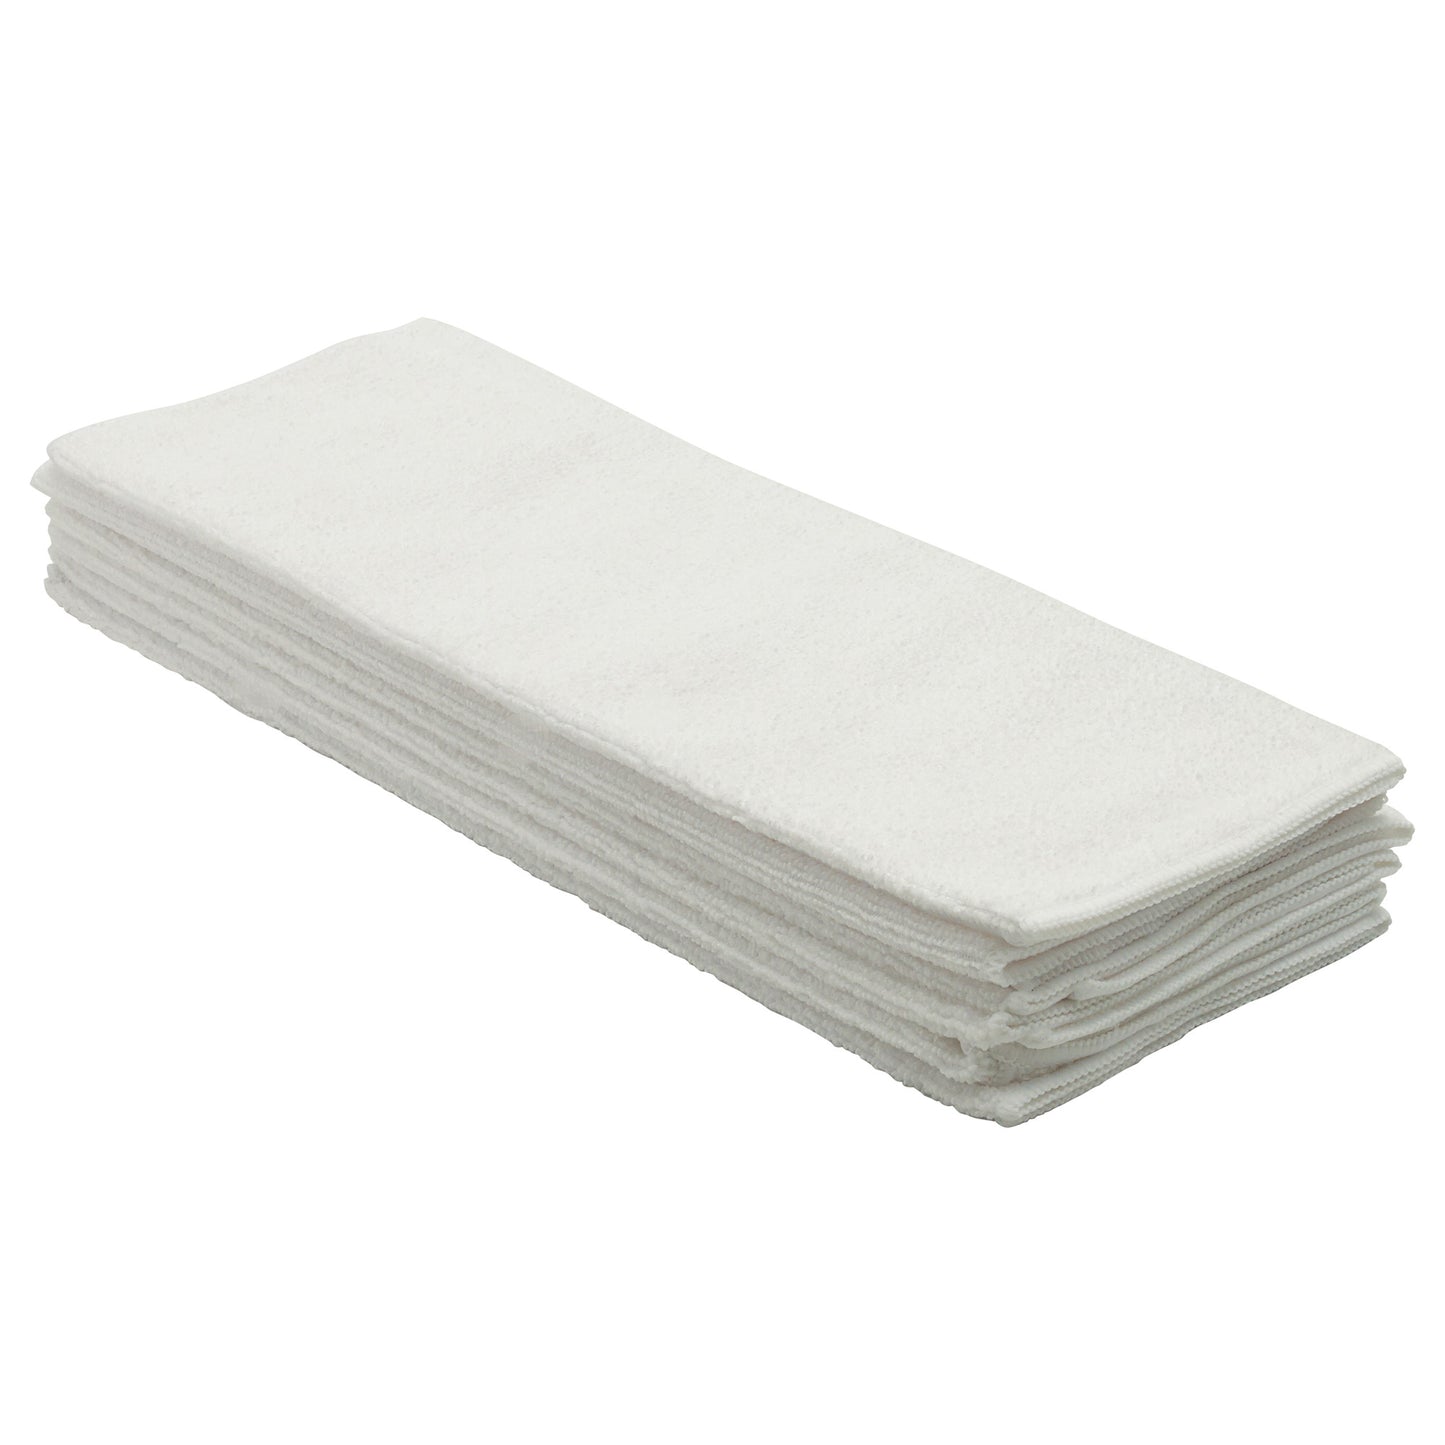 BTM-16W - Microfiber Towel, 16" x 16", 6 Pack - White